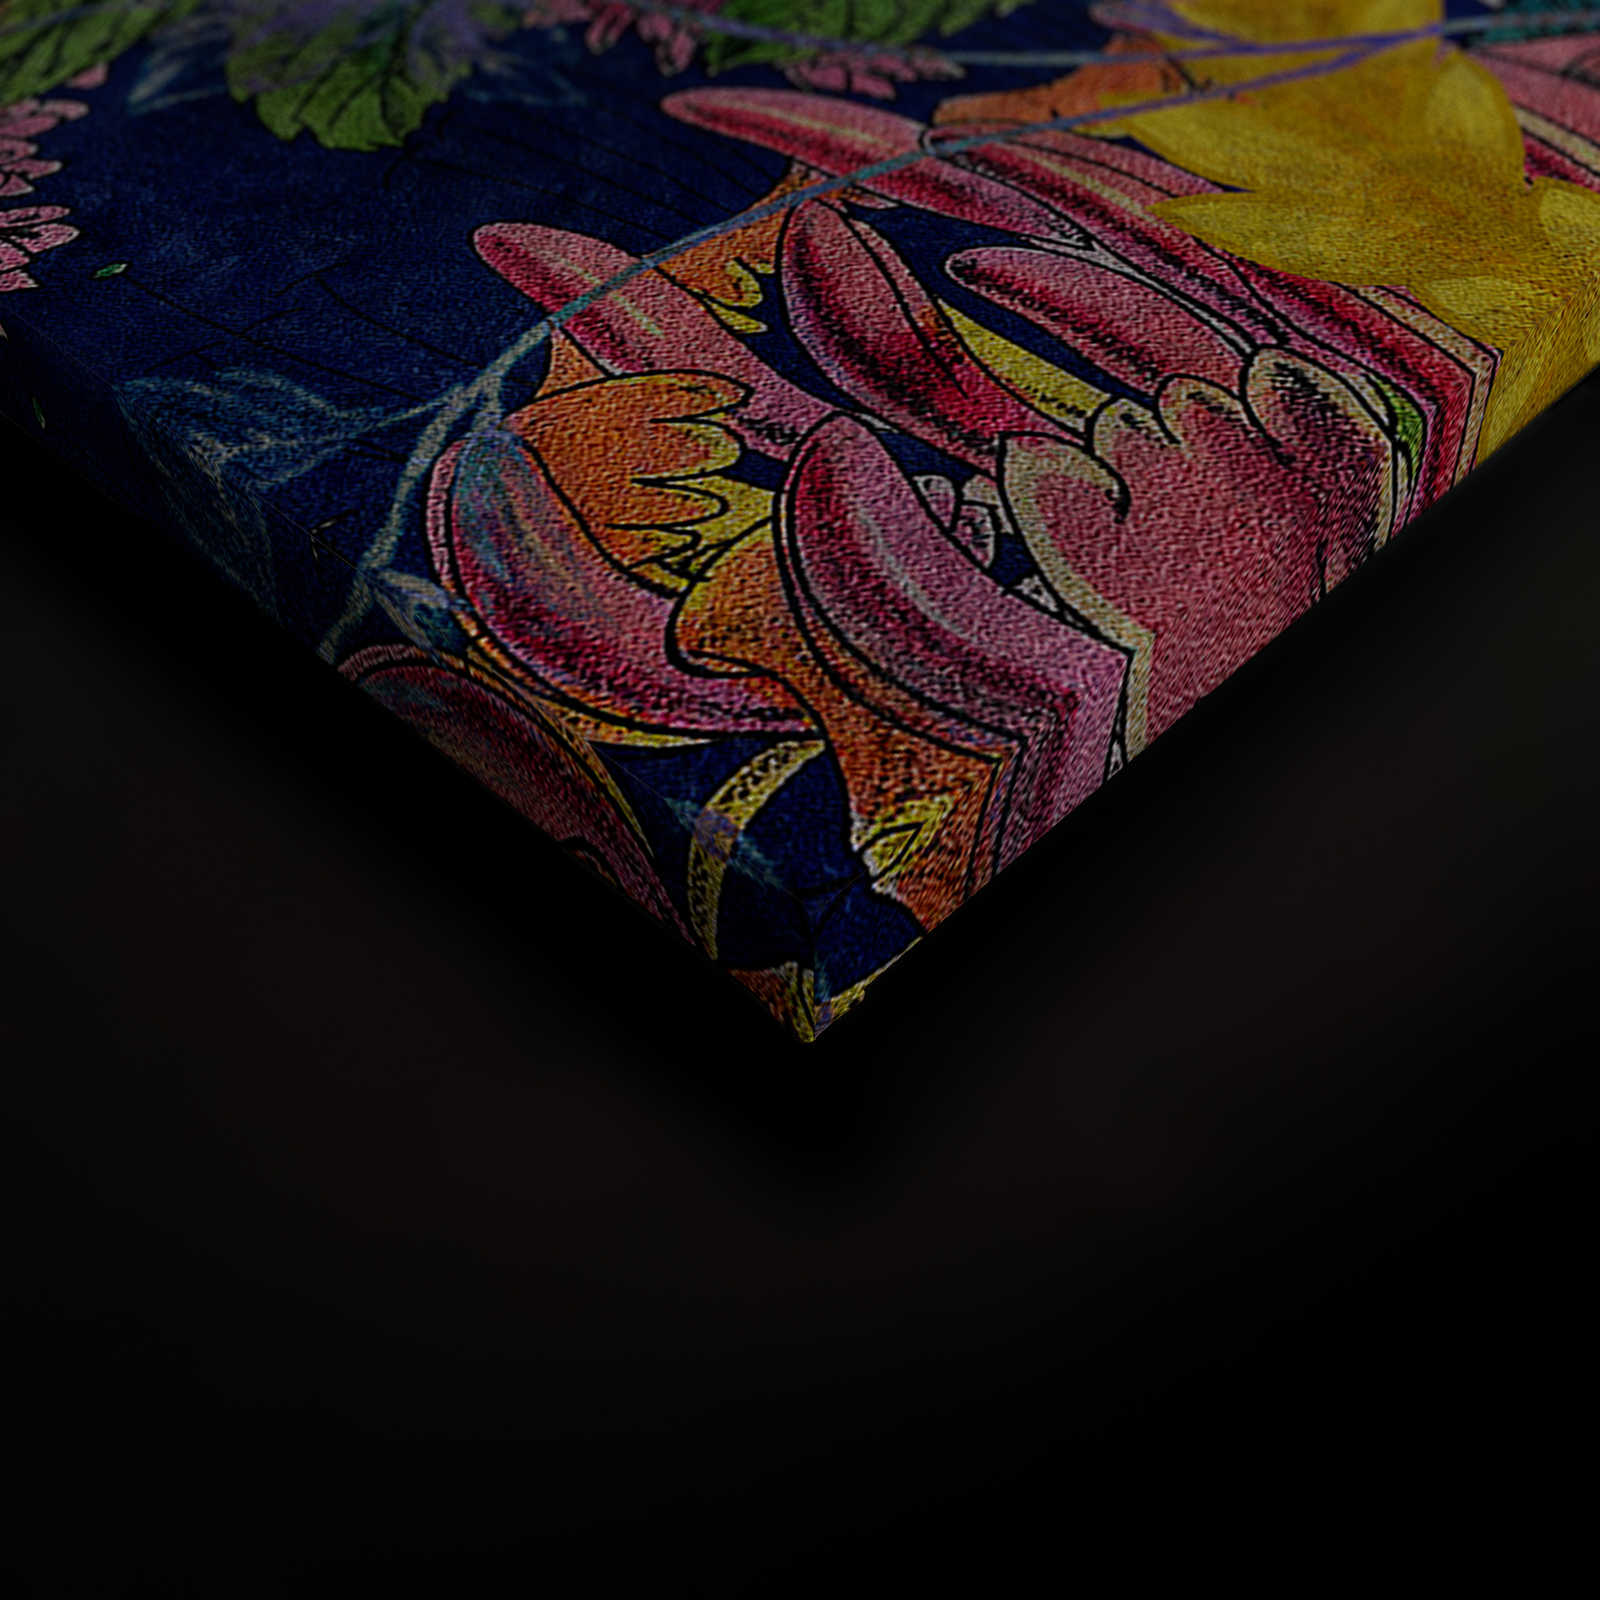             Tropical Hero 1 - Leinwandbild Blumen & Papagei intensive Farben – 1,20 m x 0,80 m
        